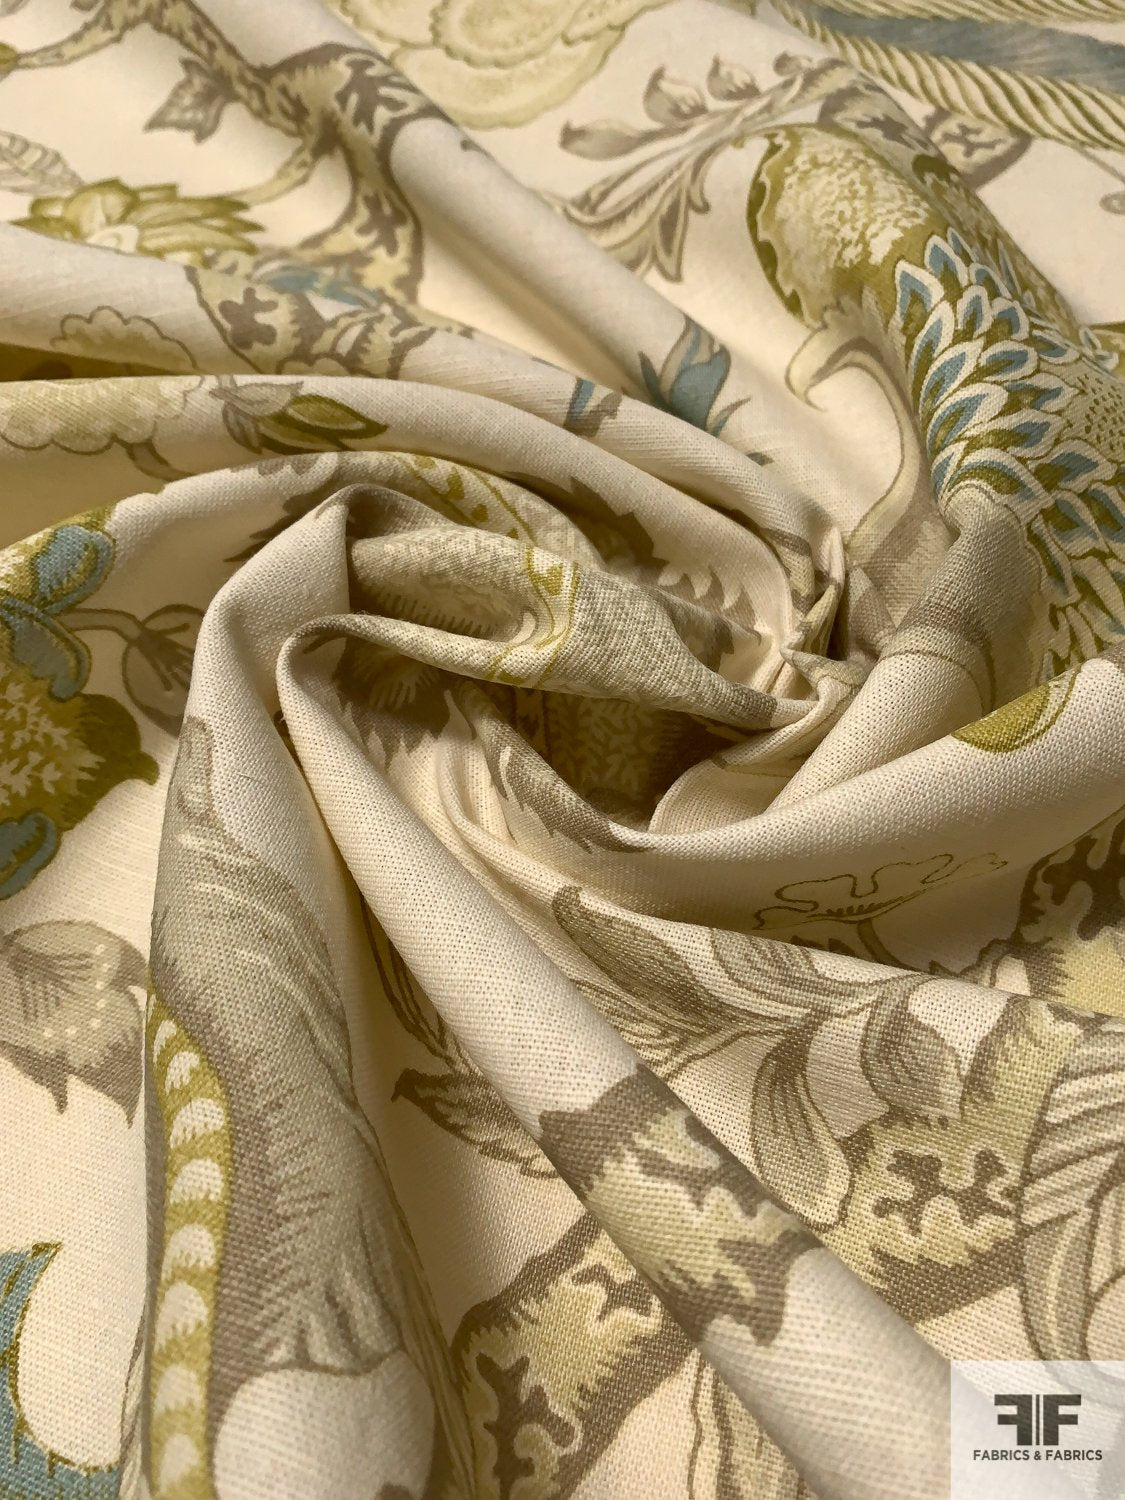 Classic Fabrics - Authentic fabrics - Wool, linen, cotton and silk